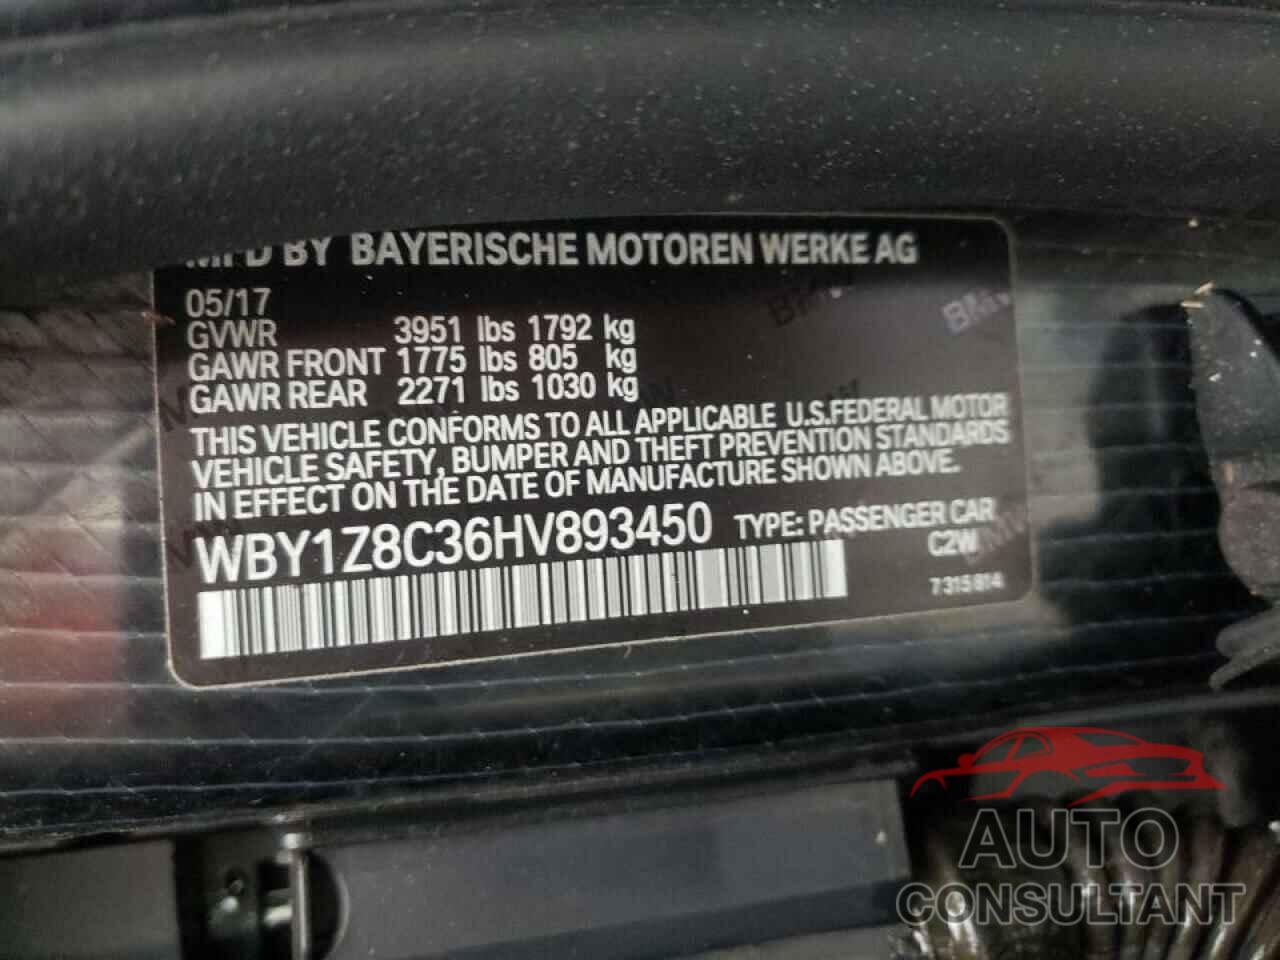 BMW I SERIES 2017 - WBY1Z8C36HV893450